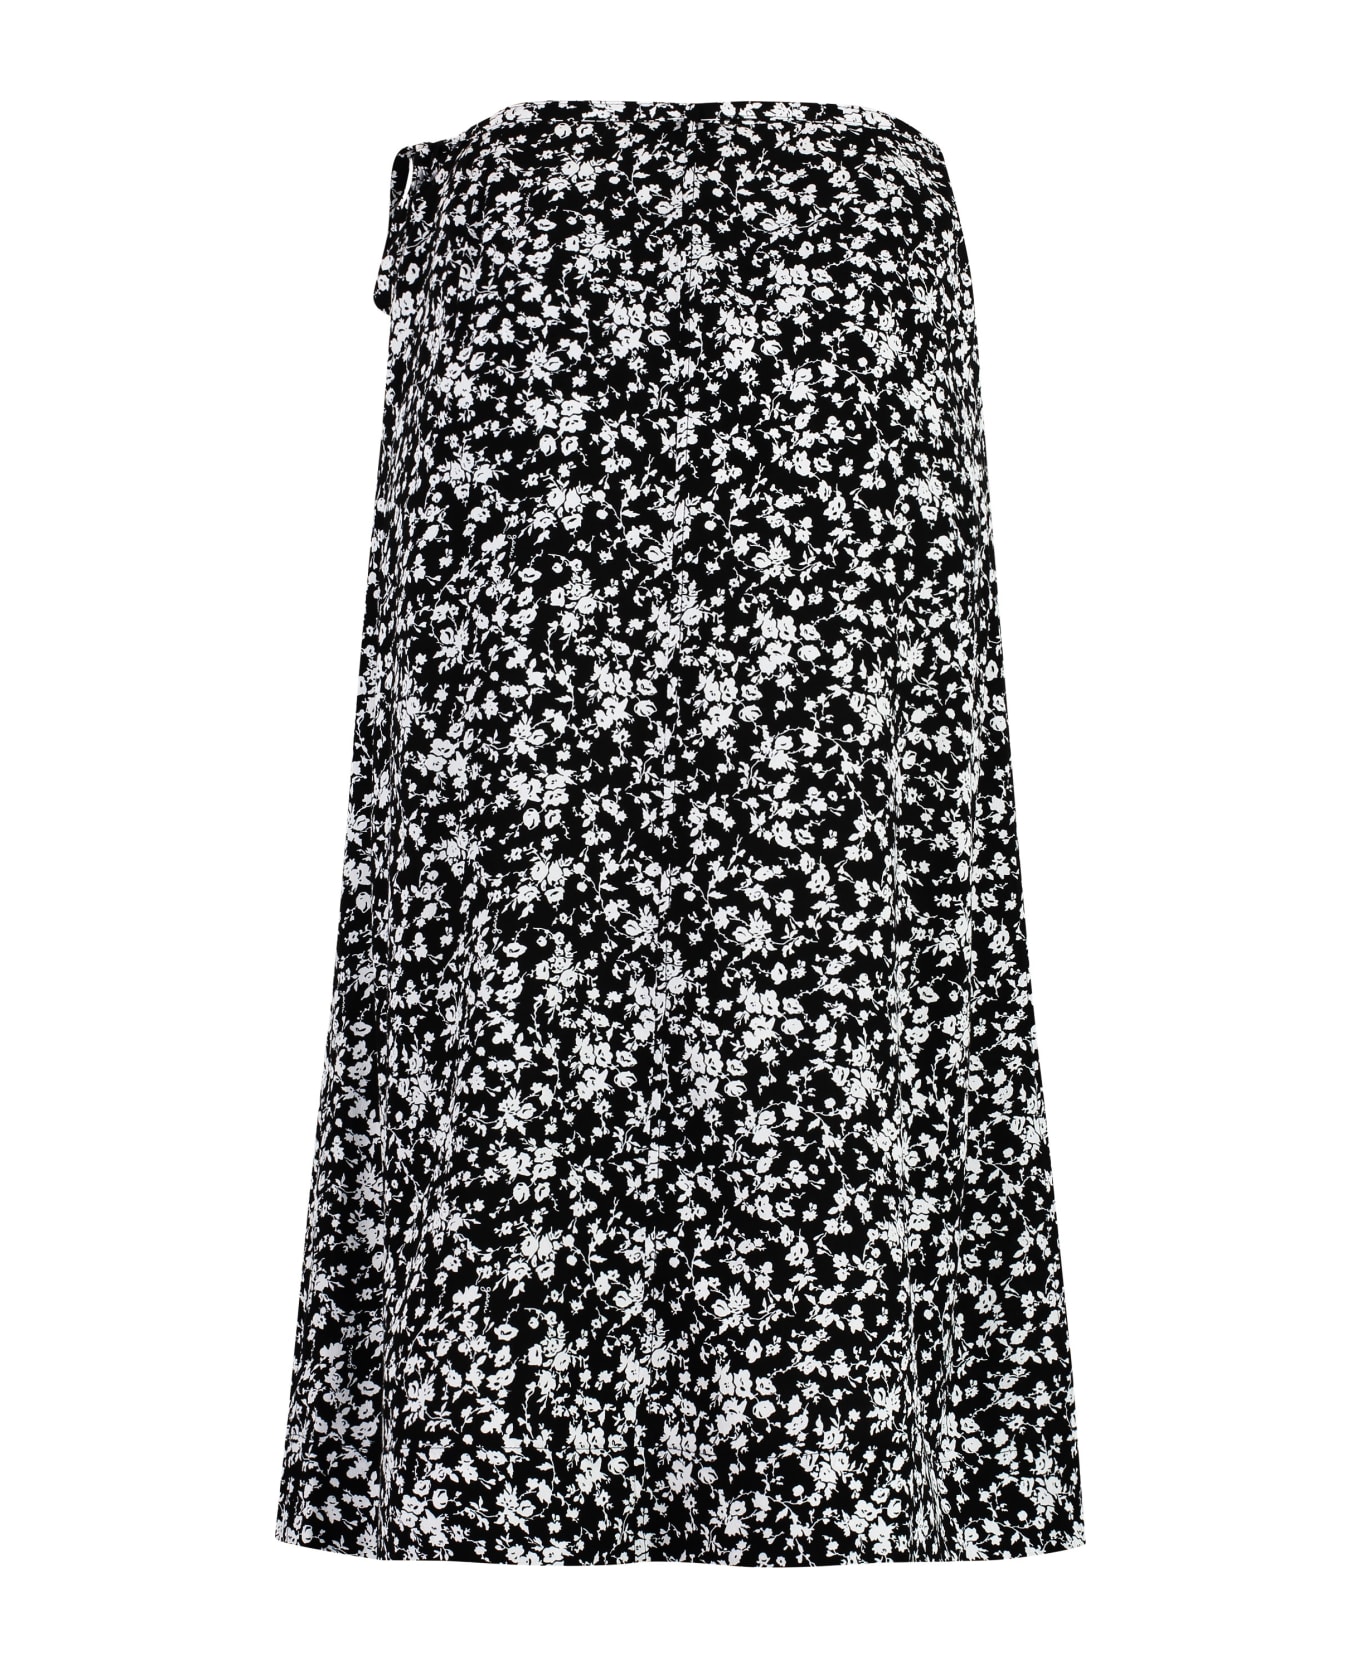 Ganni Printed Crepe Skirt - black